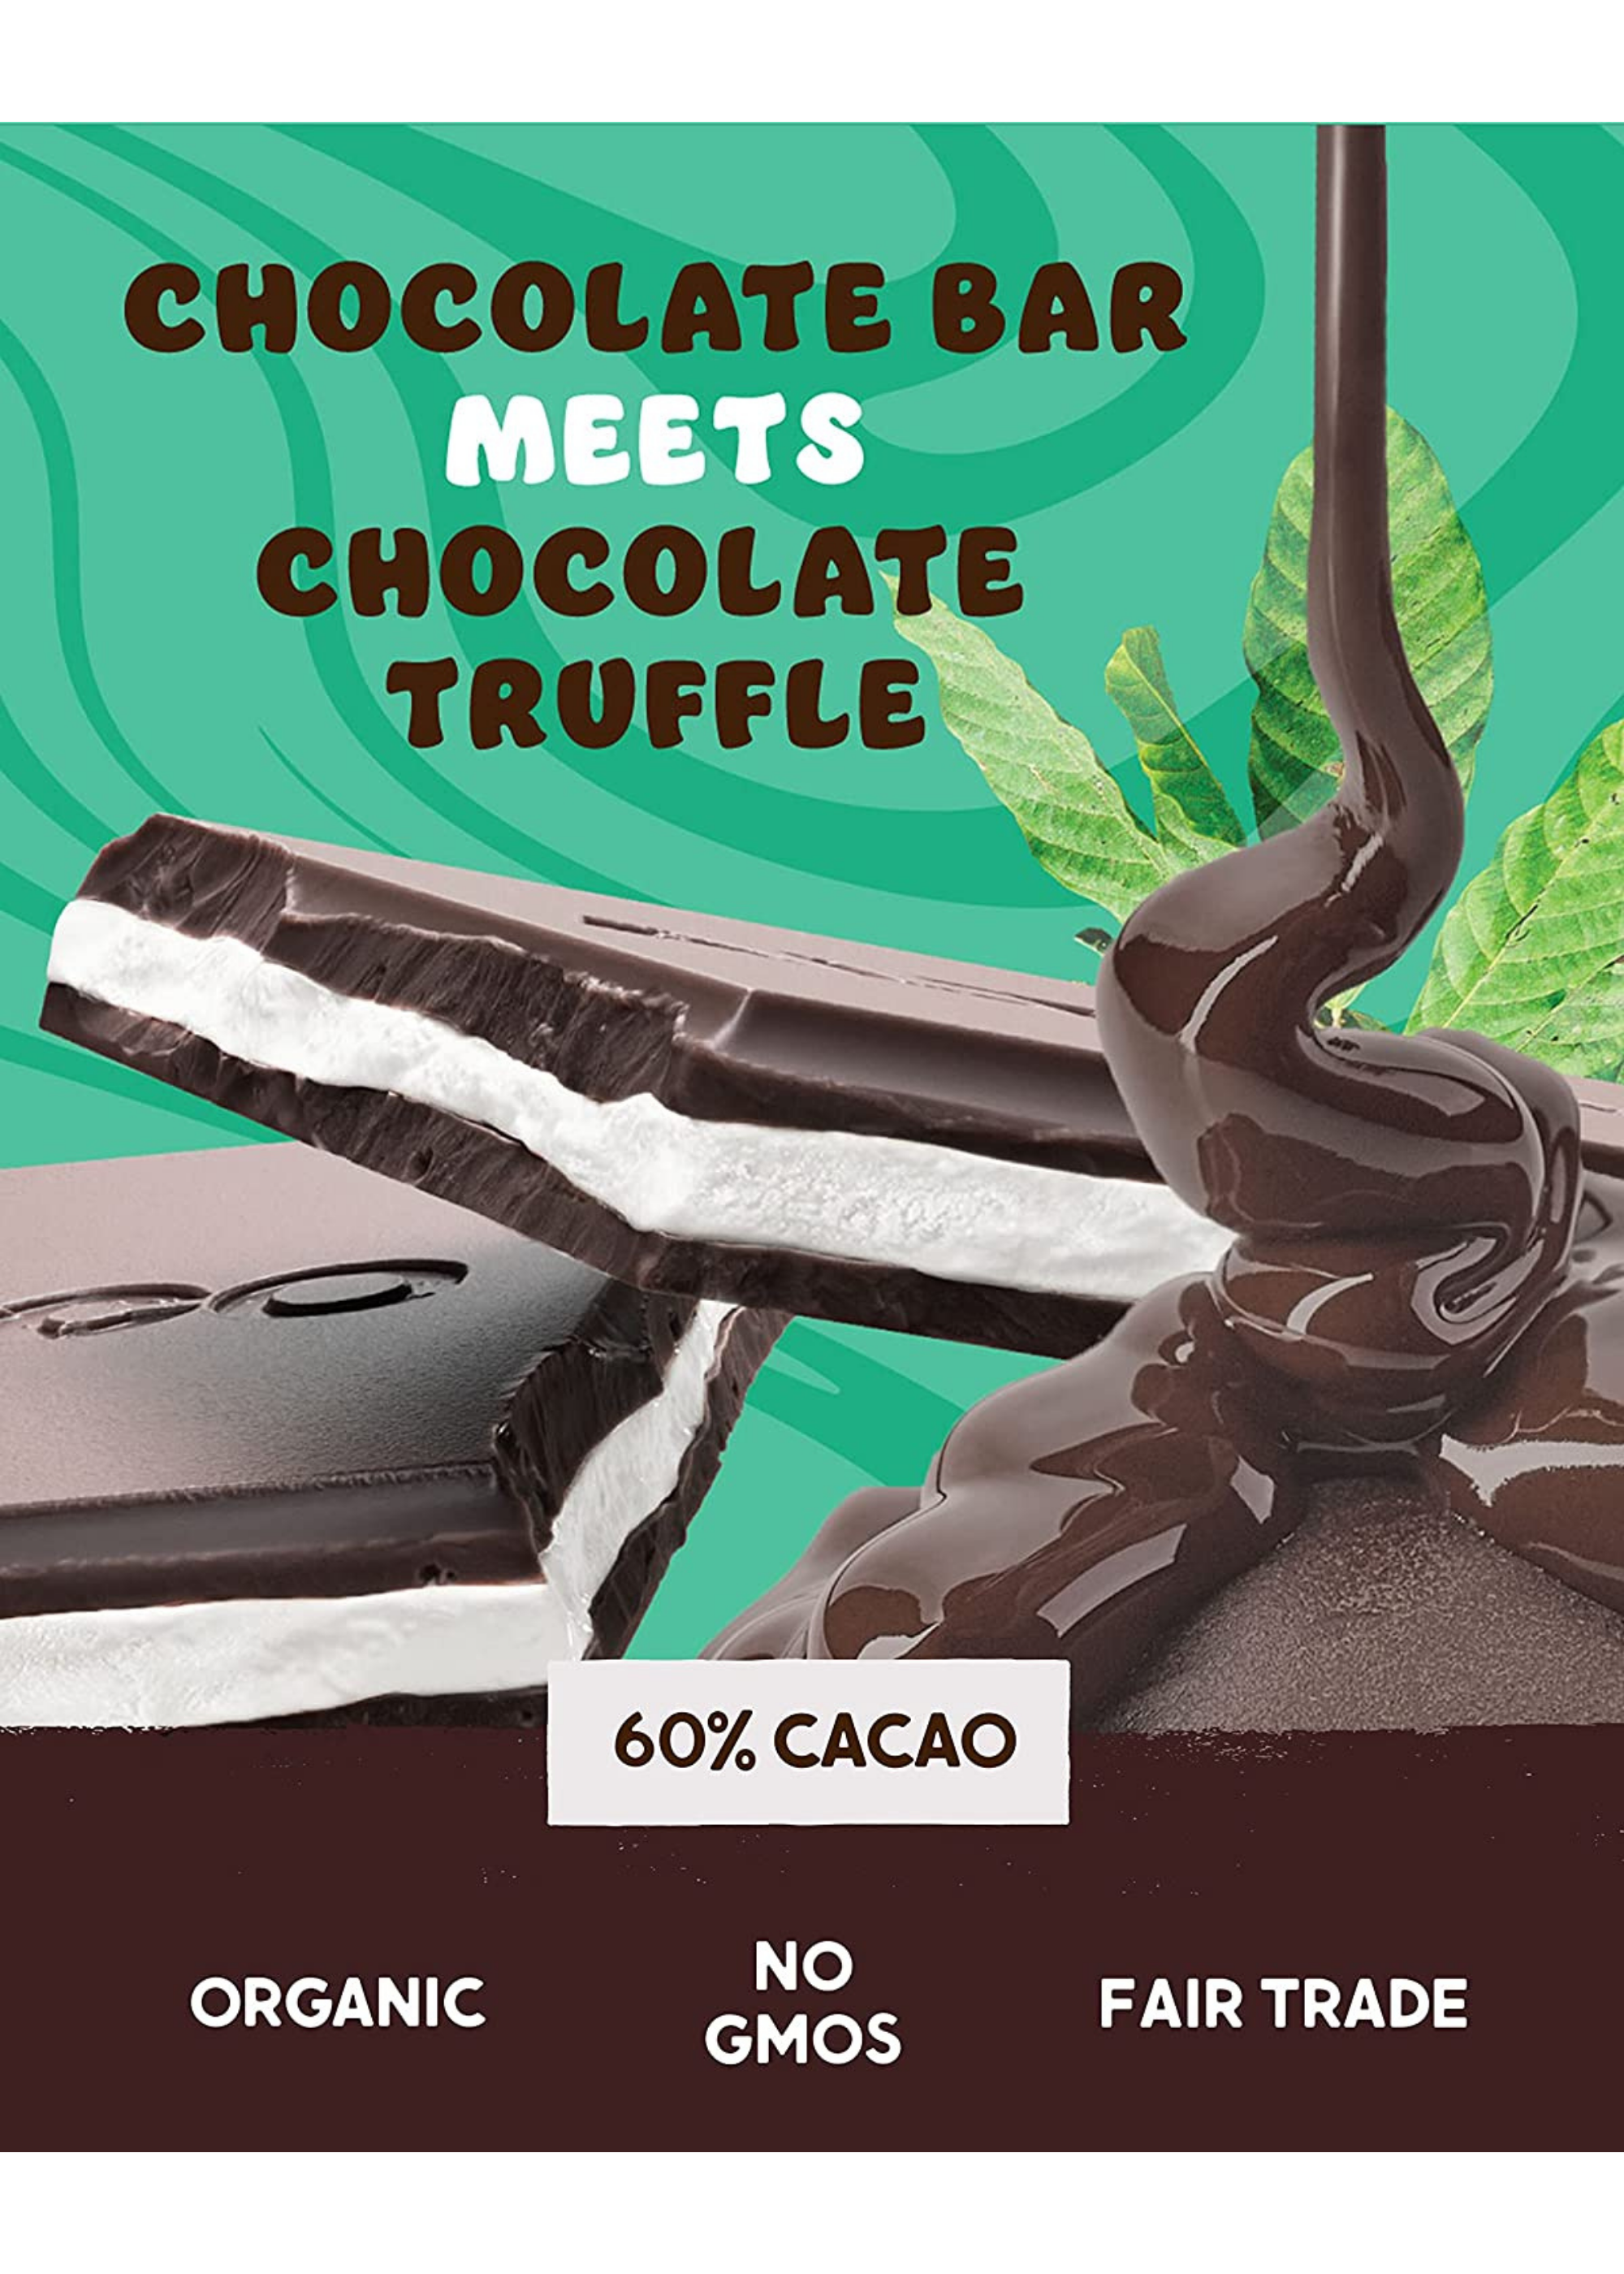 Alter Eco Creme Brulee Truffle Thins Dark Chocolate Bar – the international  pantry